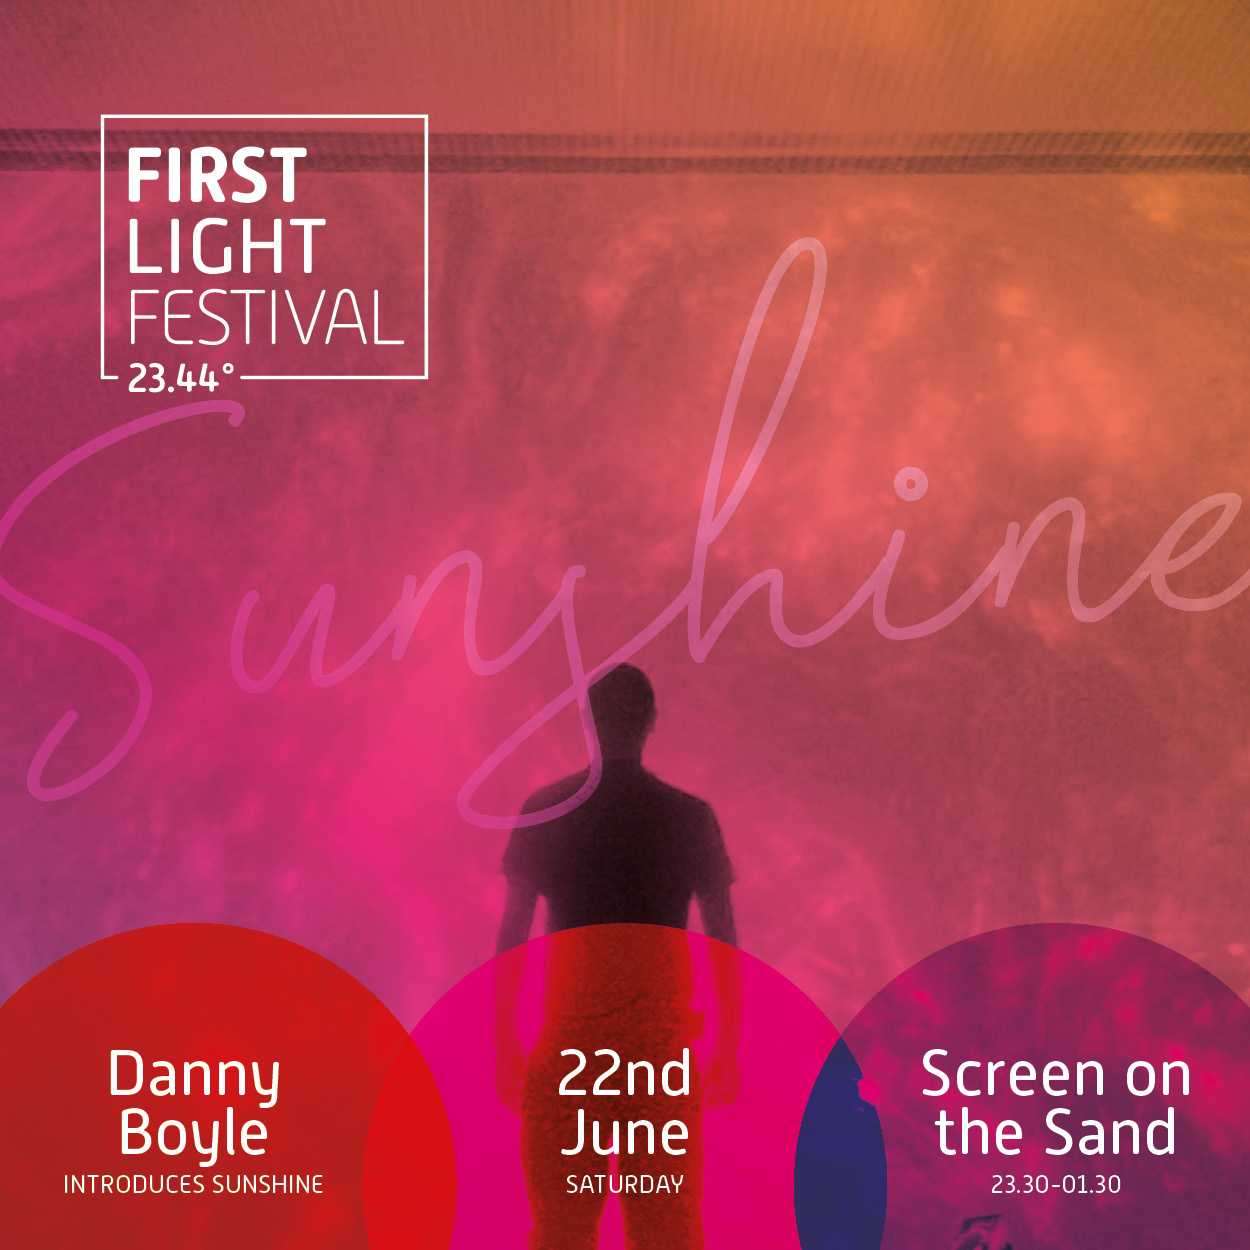 First Light Festival - Danny Boyle Image